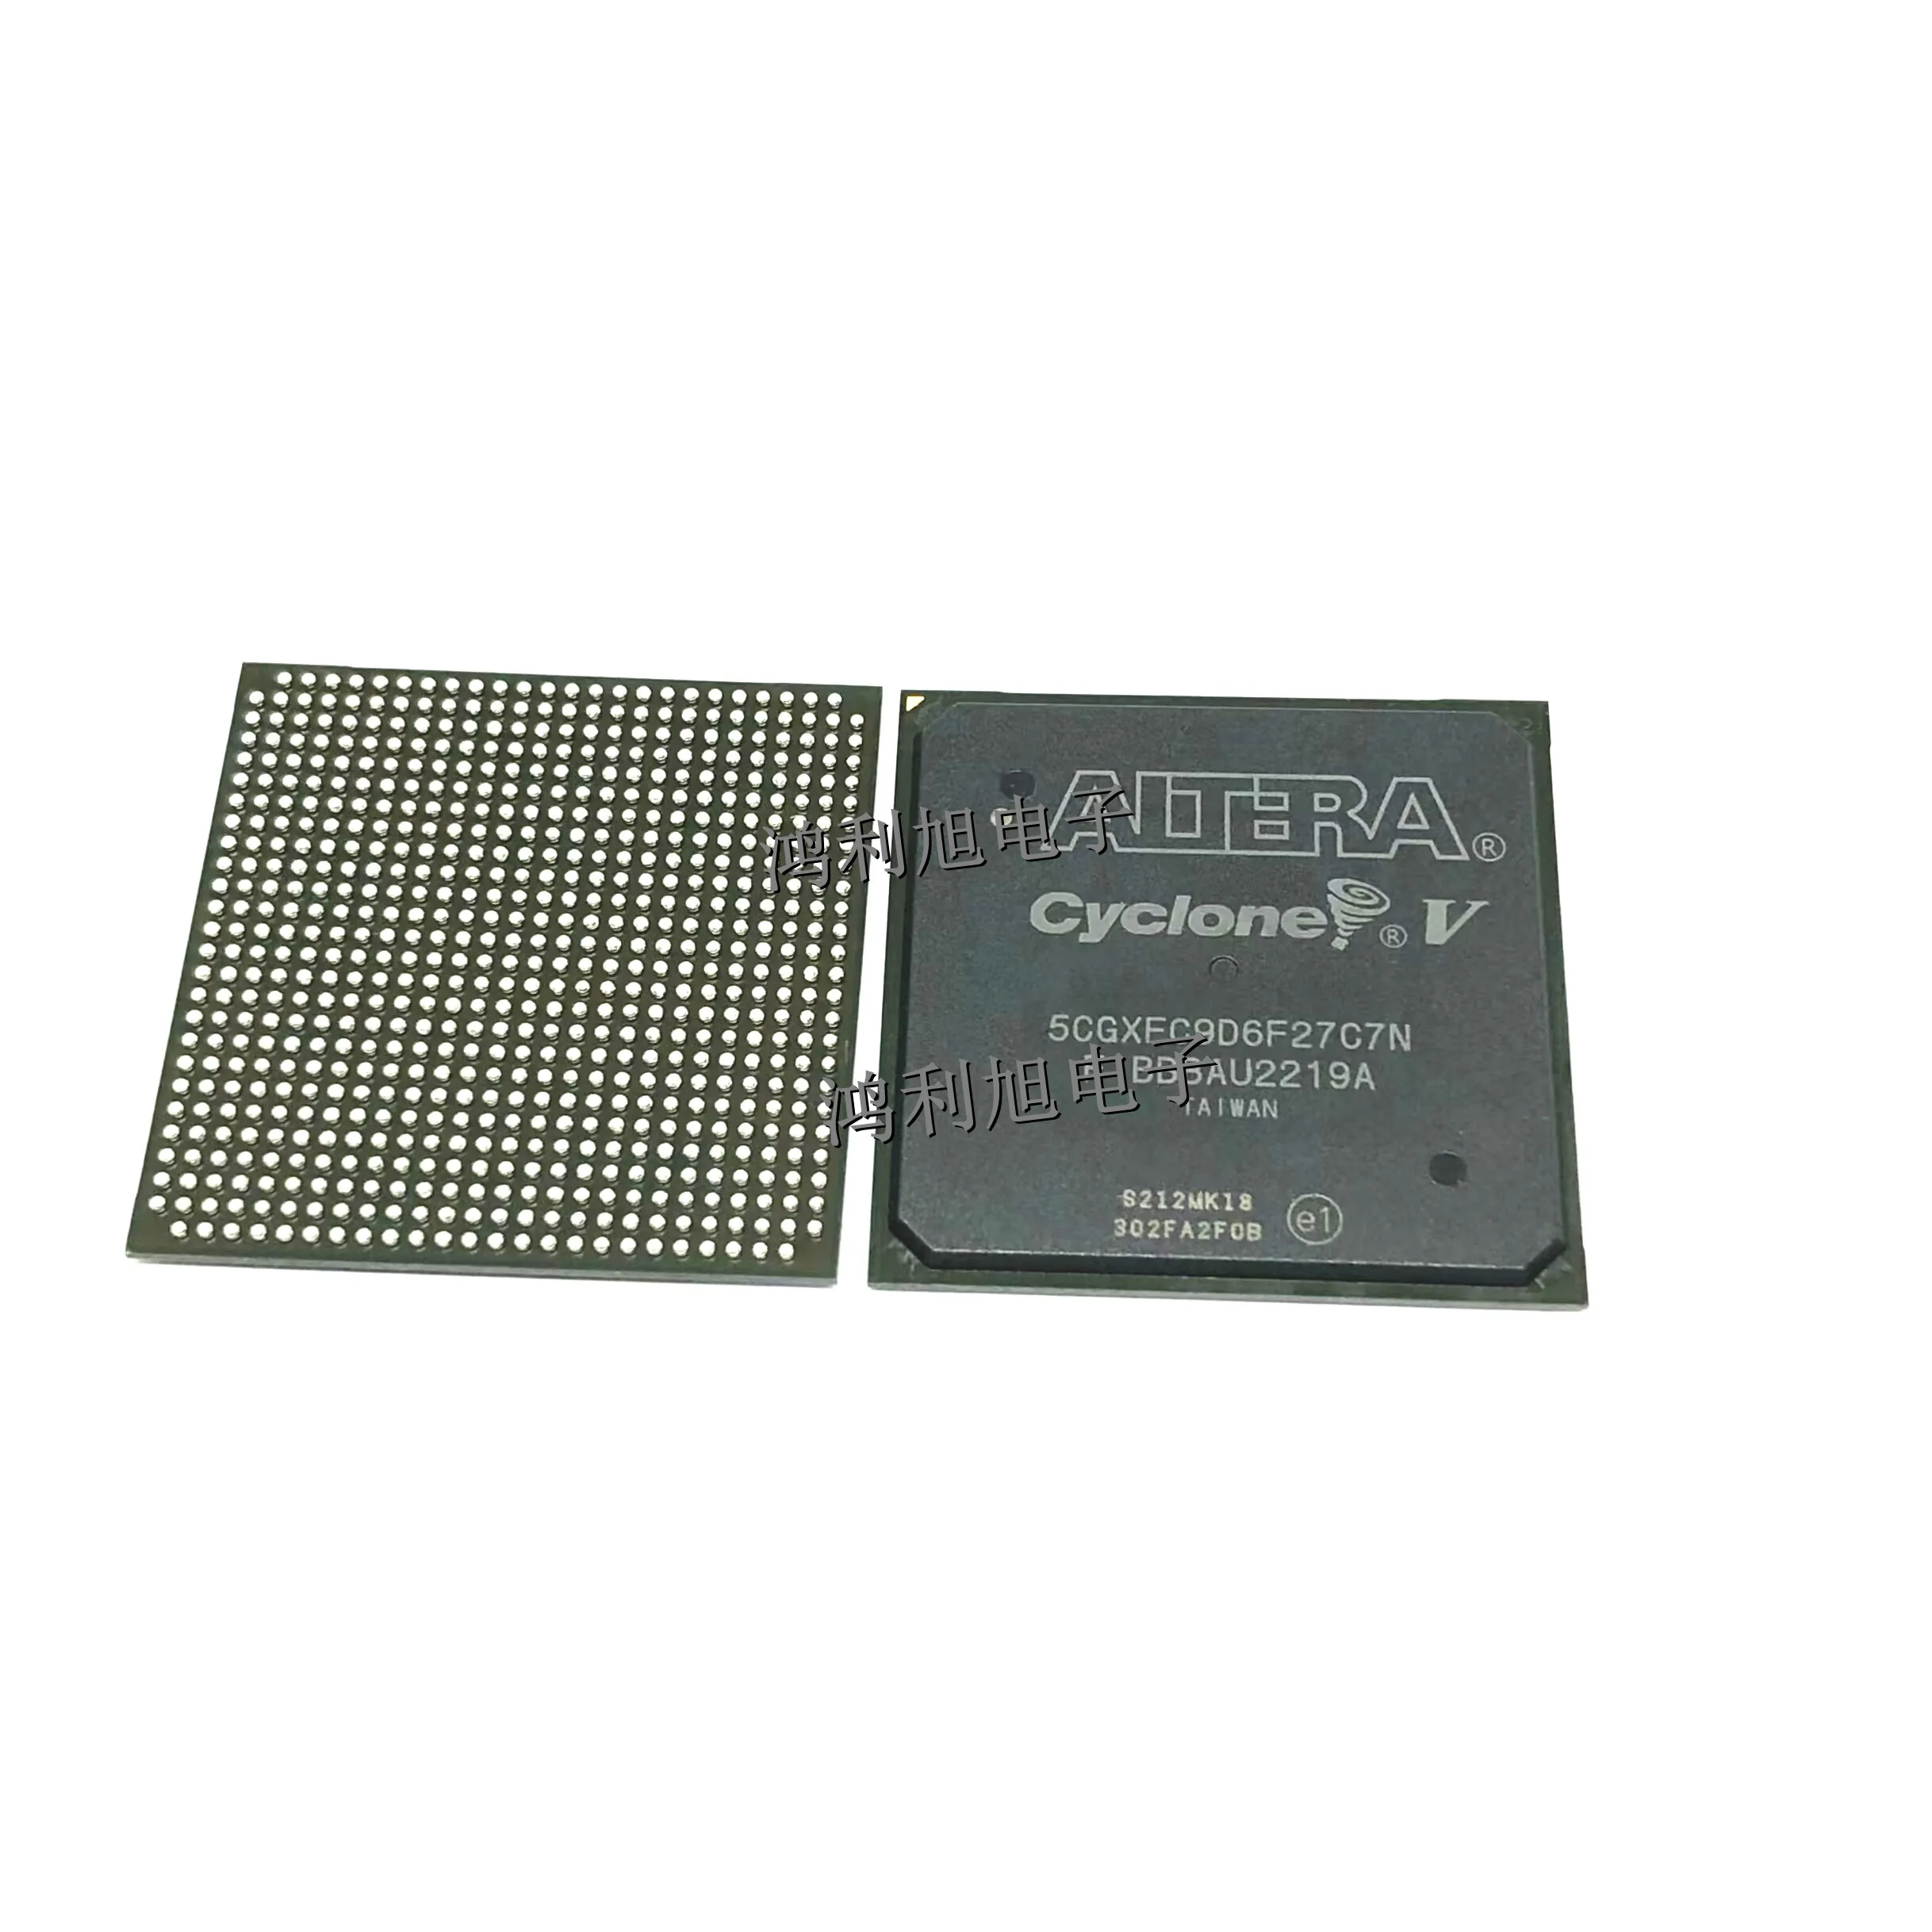 1 шт./лот 5CGXFC9D6F27C7N FPGA Cyclone® V Семейства GX 301000 Ячеек 28-нм Технология 1.1V 672-Контактный FBGA 3